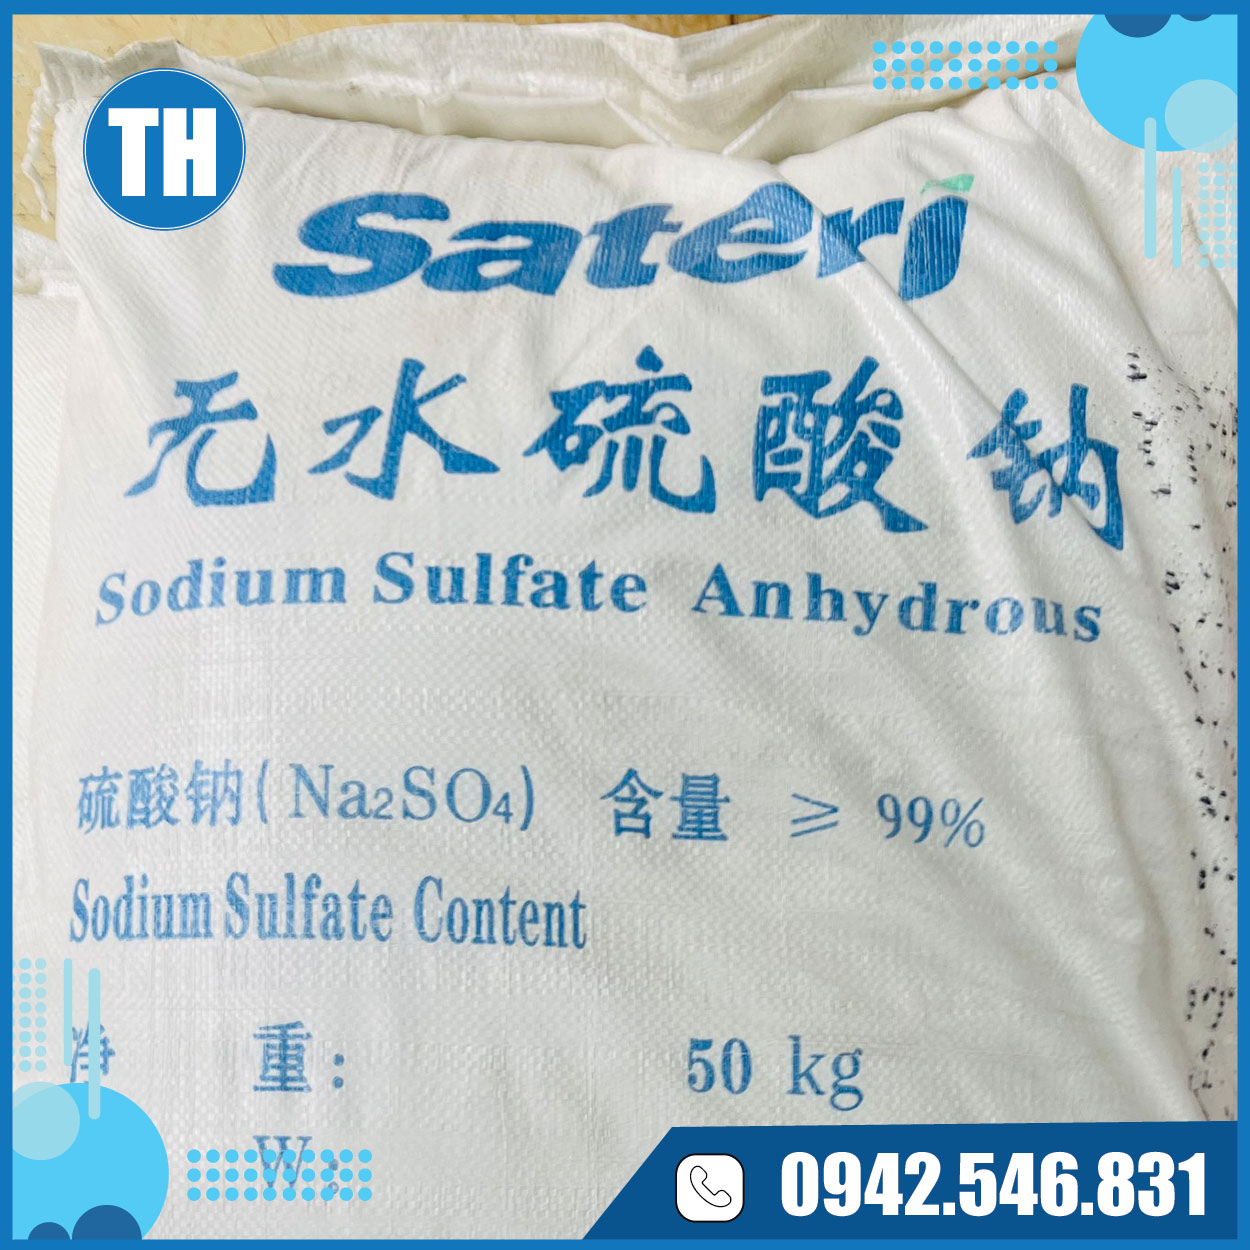 Sodium Sulfate />
                                                 		<script>
                                                            var modal = document.getElementById(